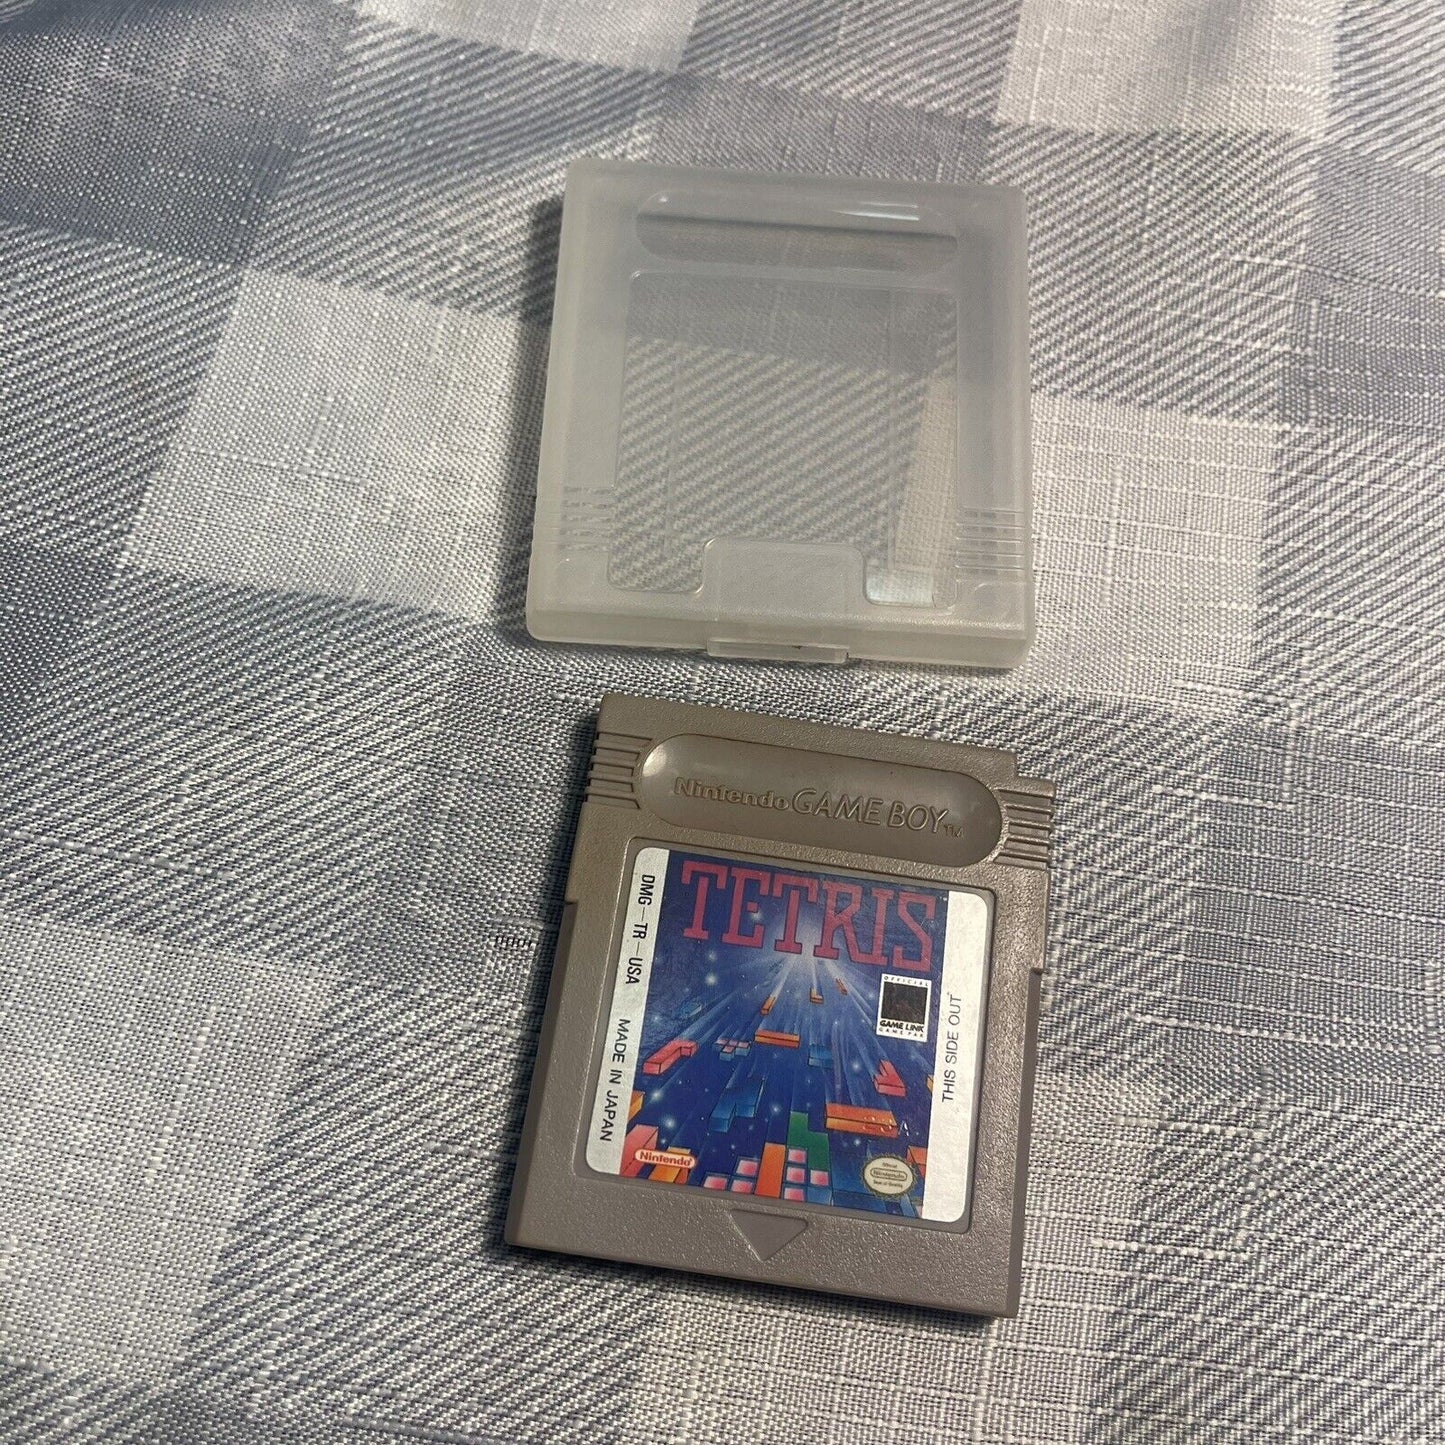 Tetris Nintendo Original Game Boy Game - Tested - Working - Authentic!